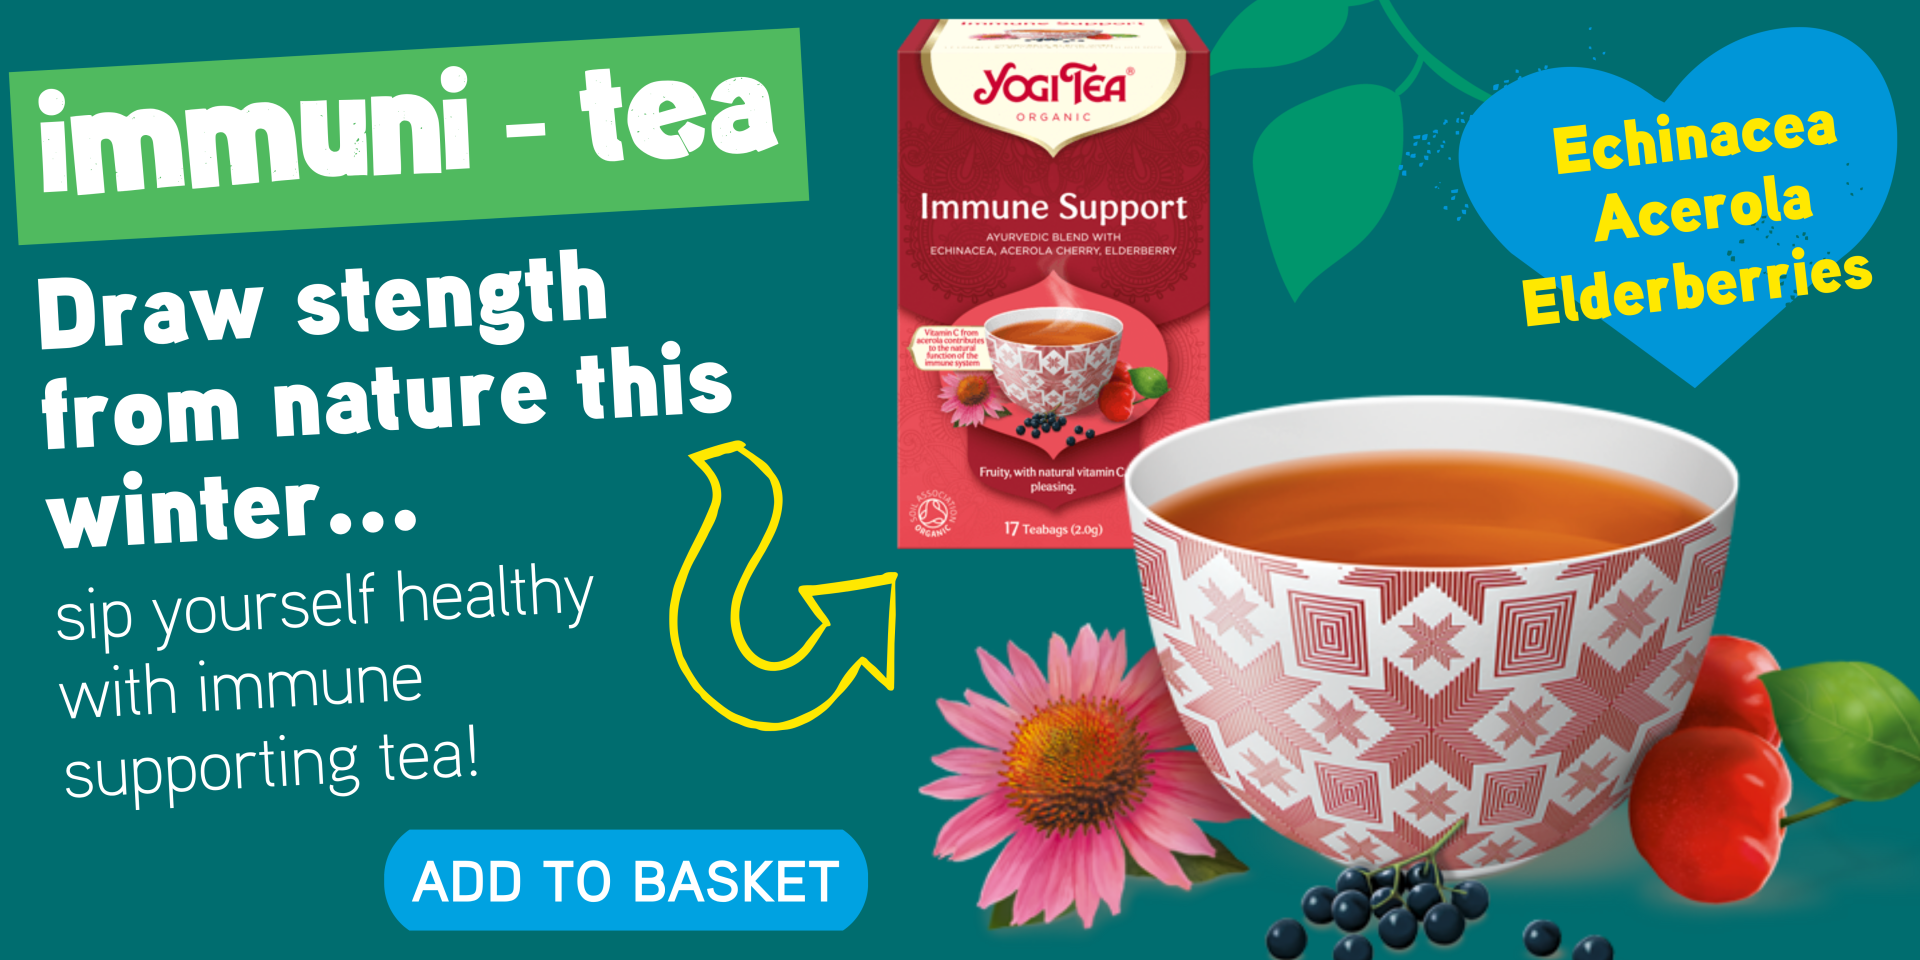 Yogi Tea immunity supporting tea with Echinacea, Acerola and Elderberries.